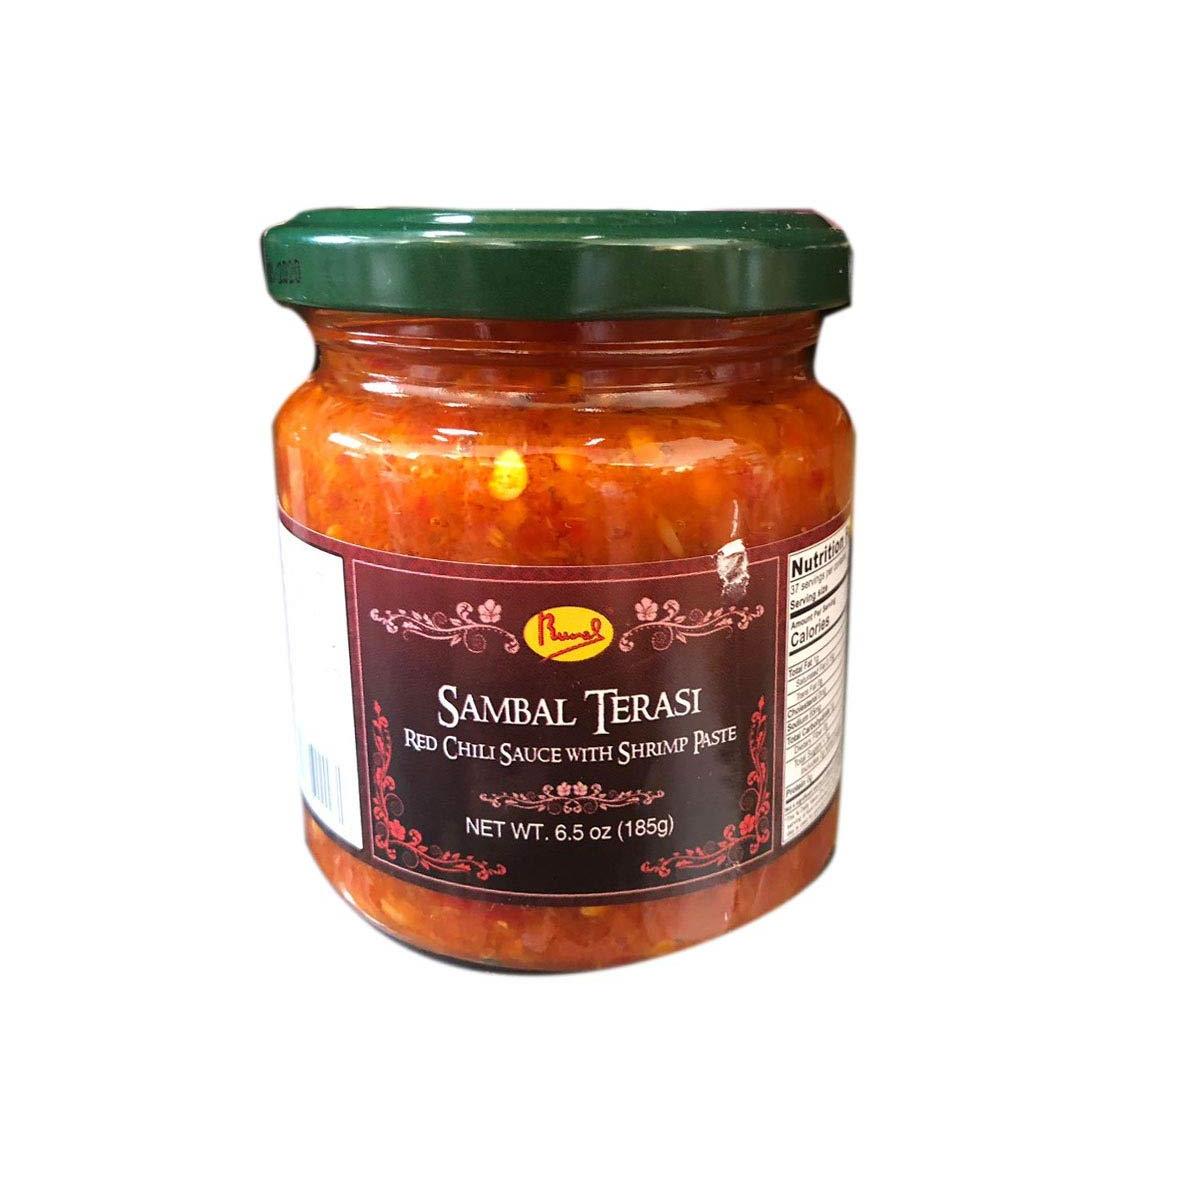 Runel Red Chili Sauce With Shrimp Paste (Sambal Terasi) - 6.5oz (Pack of 1)